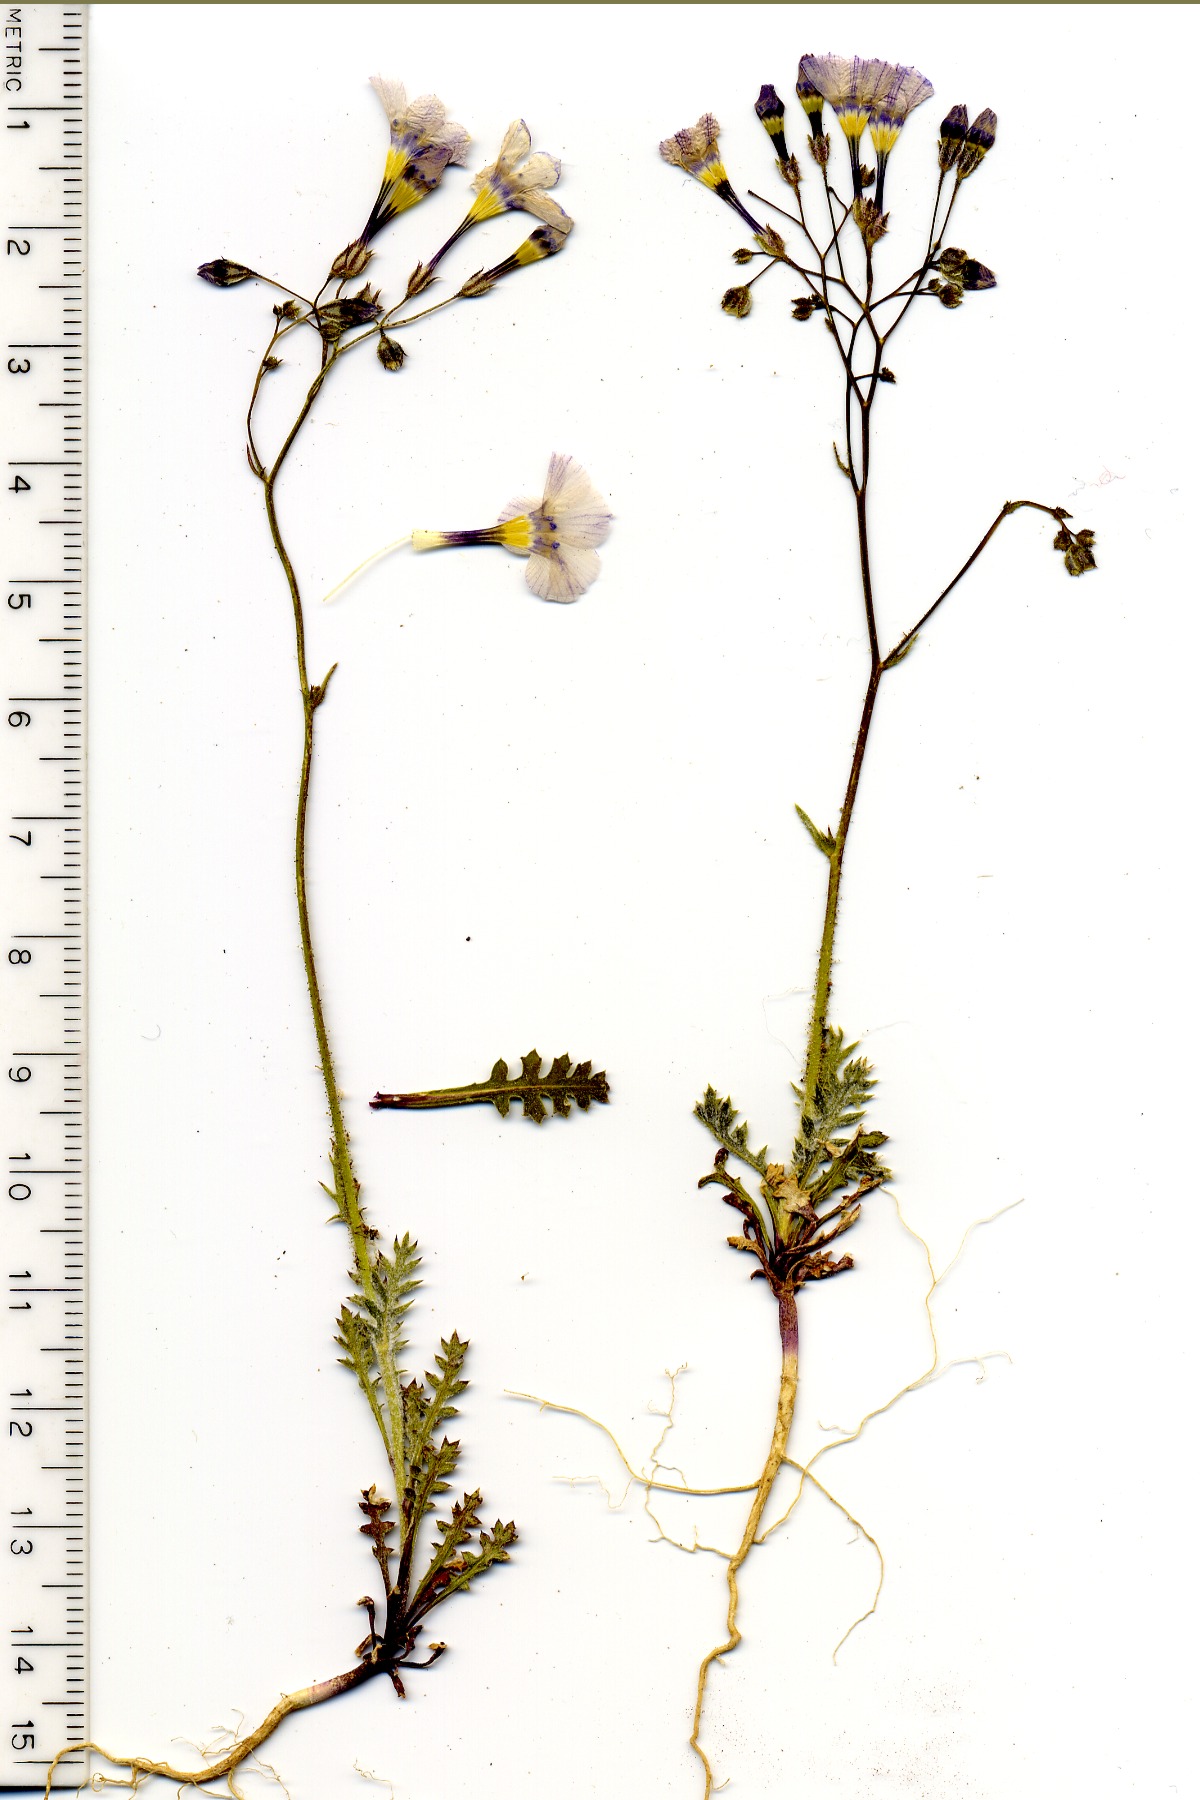 Gilia cana, Polemoniaceae, Mesquite Mountains, San Bernardino County, California